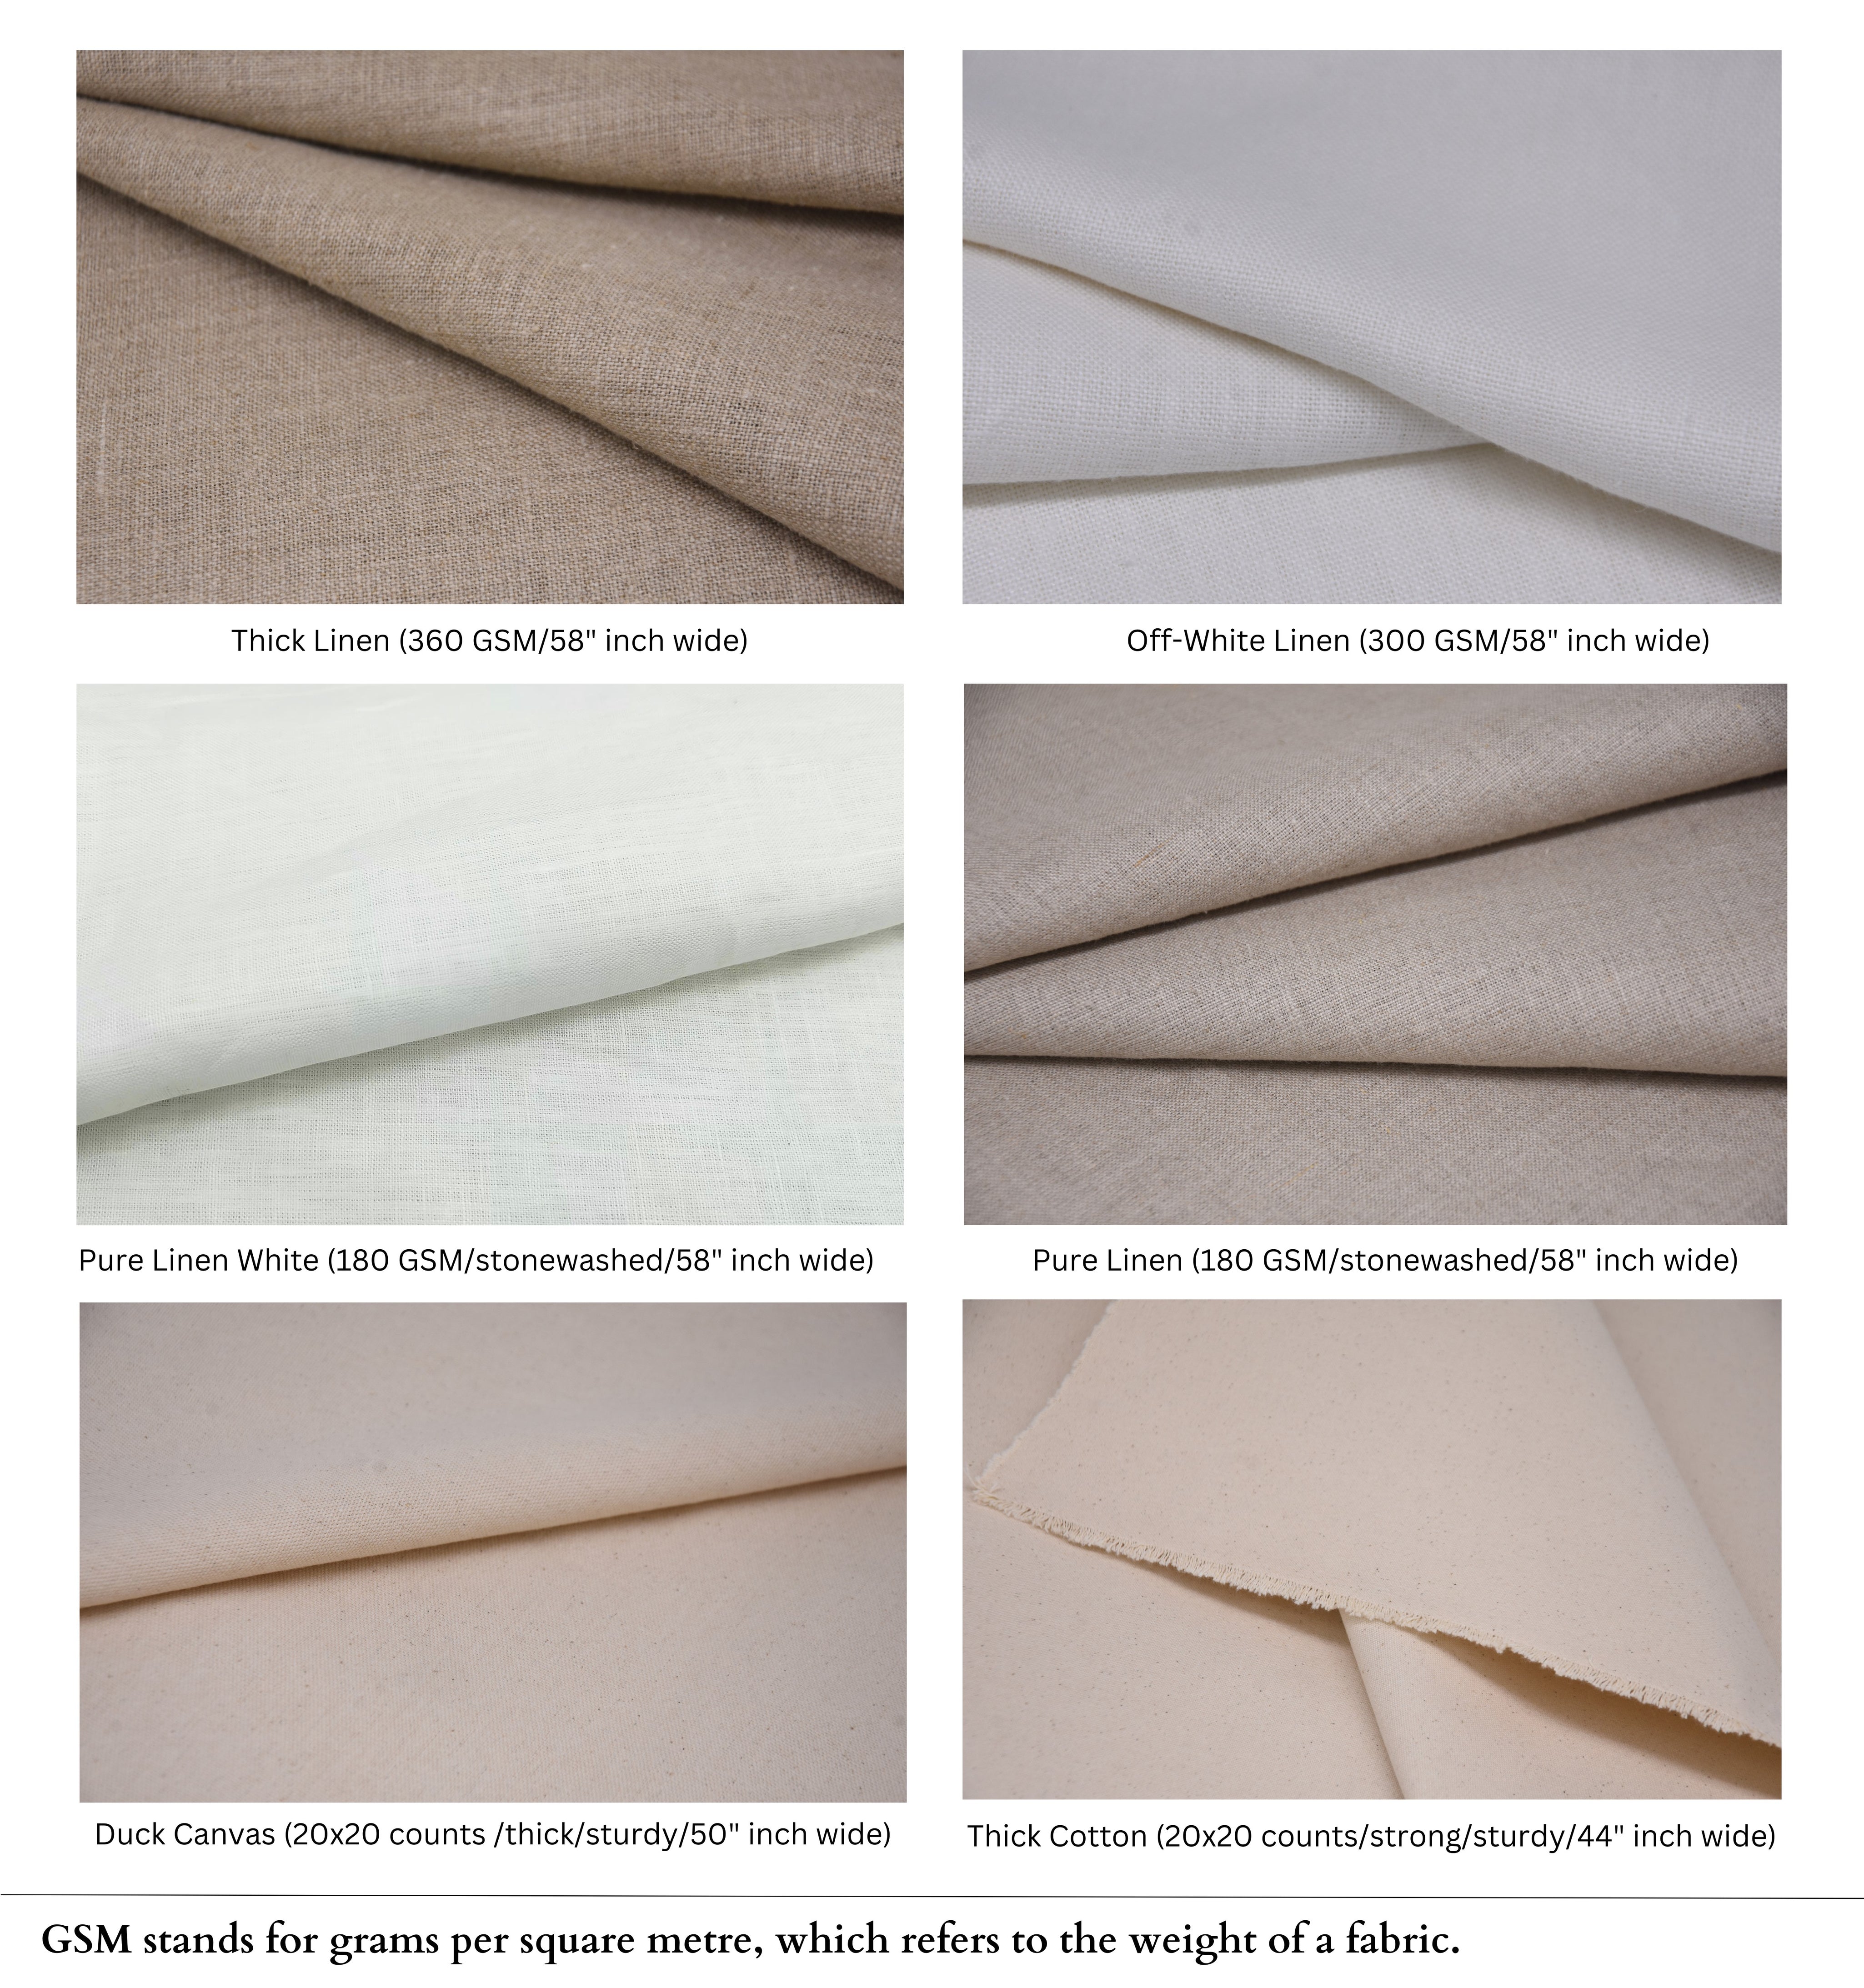 Block Print Linen Fabric, Zig Zag Road  Block Print Fabric By The Yard, Indian Hand Block Stripe Pattern Fabric, Geometric Cushion Fabric Block Printed Pillow 